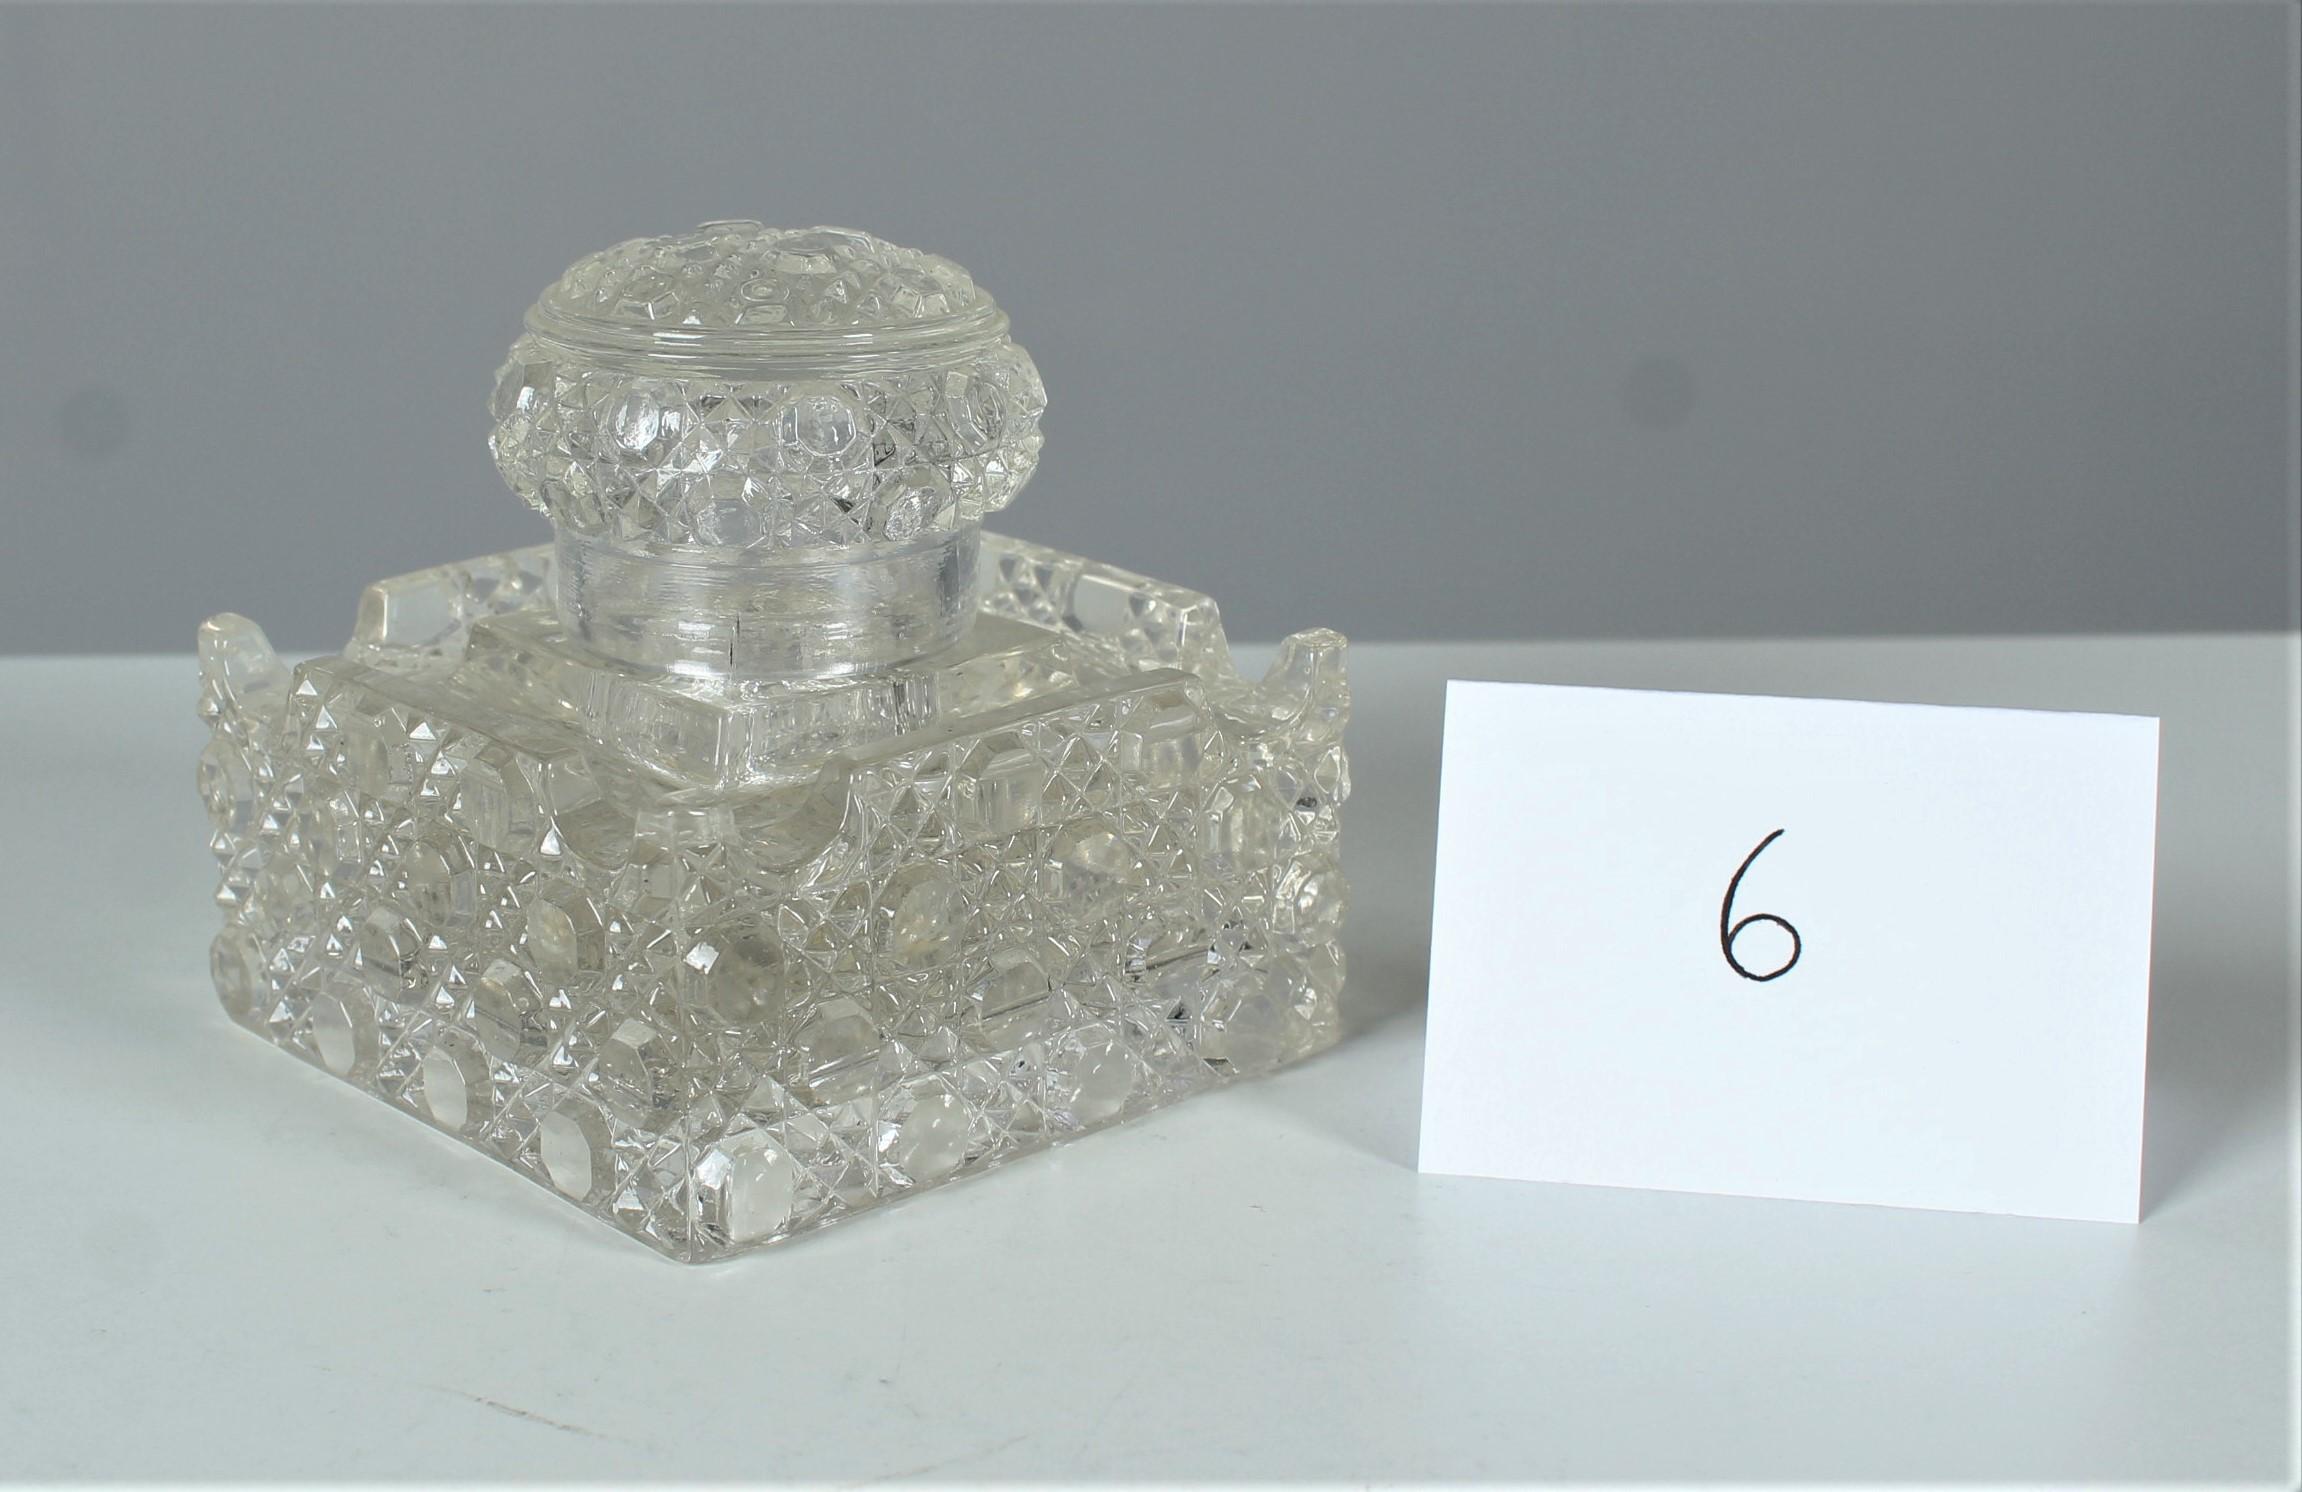 French Antique Baccarat Crystal Glass Inkstand, Pen Holder, Desk Utensil, circa 1880 For Sale